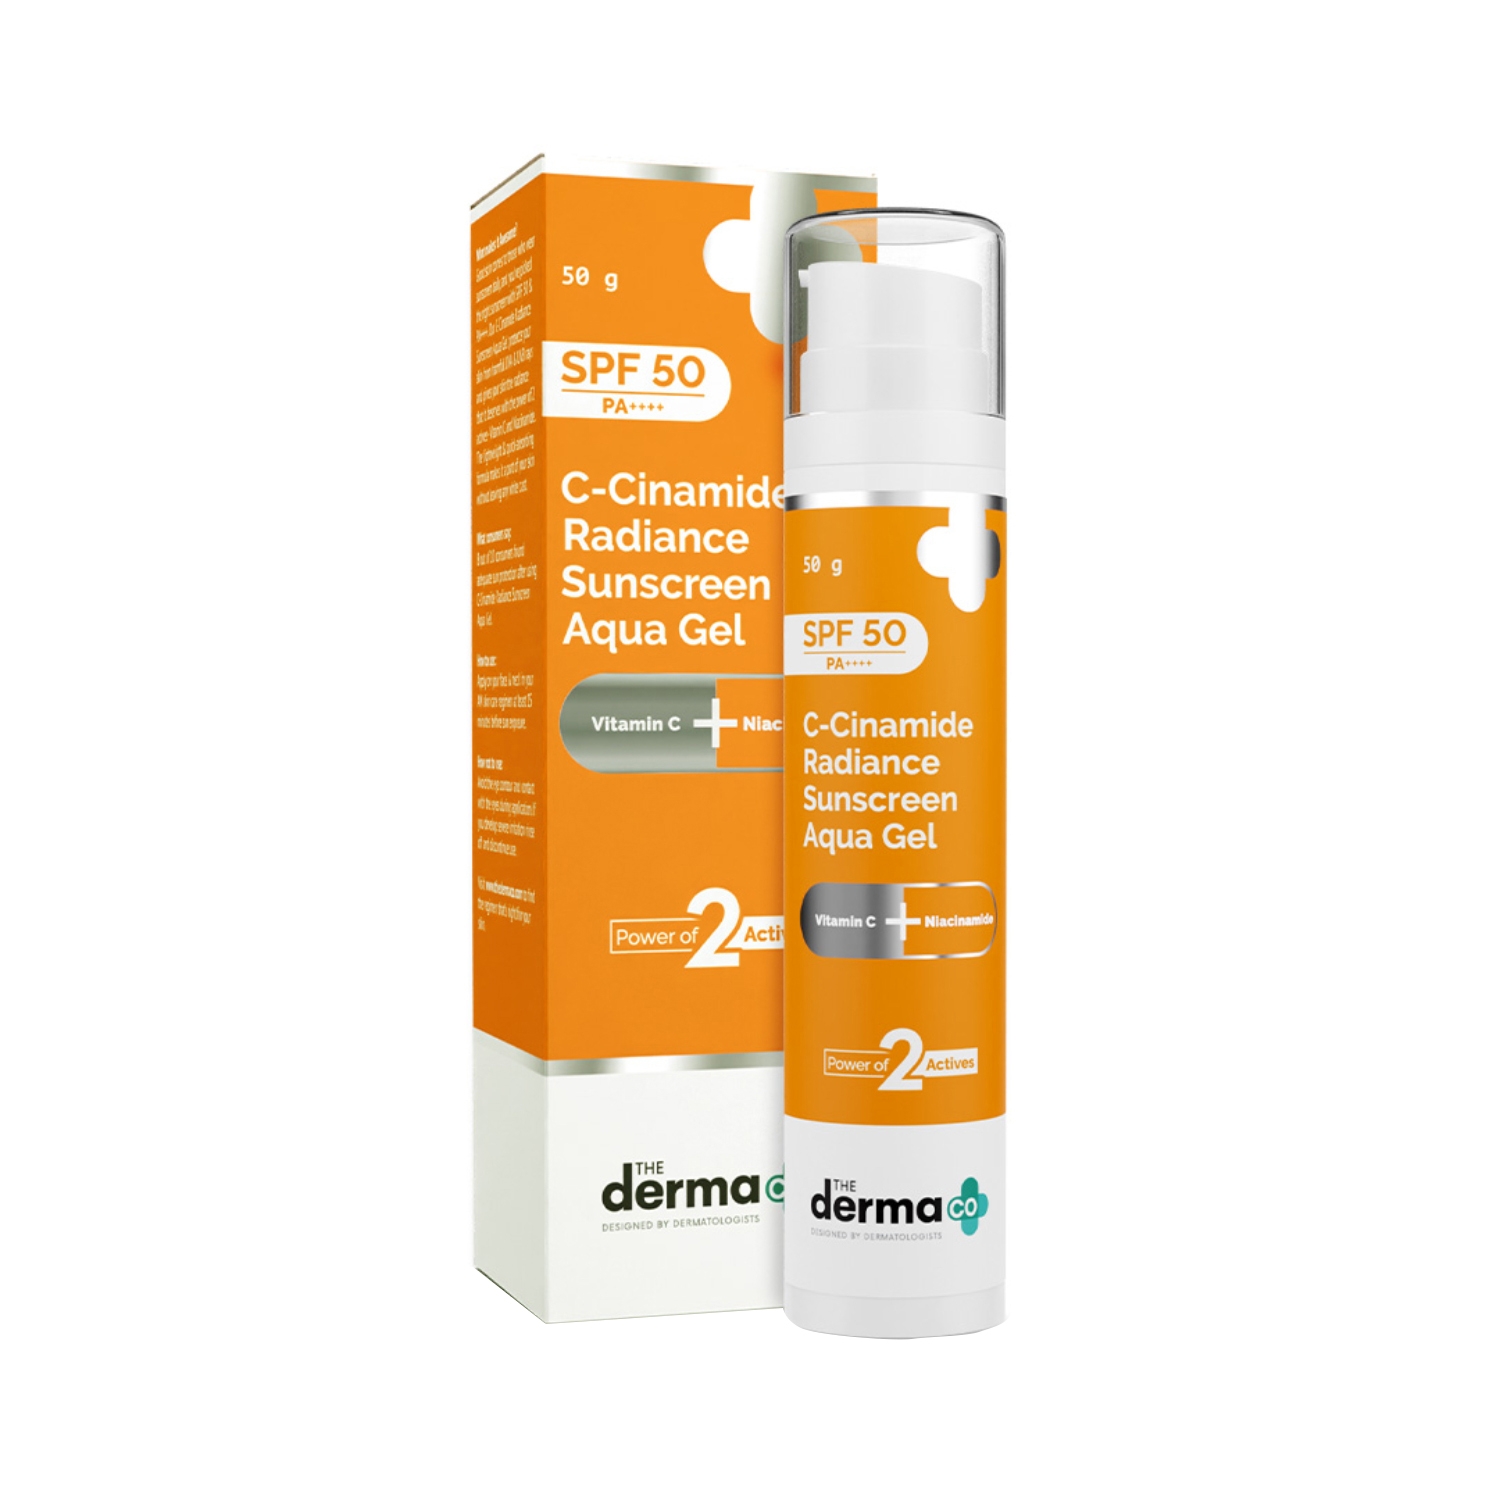 The Derma Co C-Cinamide Radiance Sunscreen Aqua Gel With SPF 50 PA++ (50g)